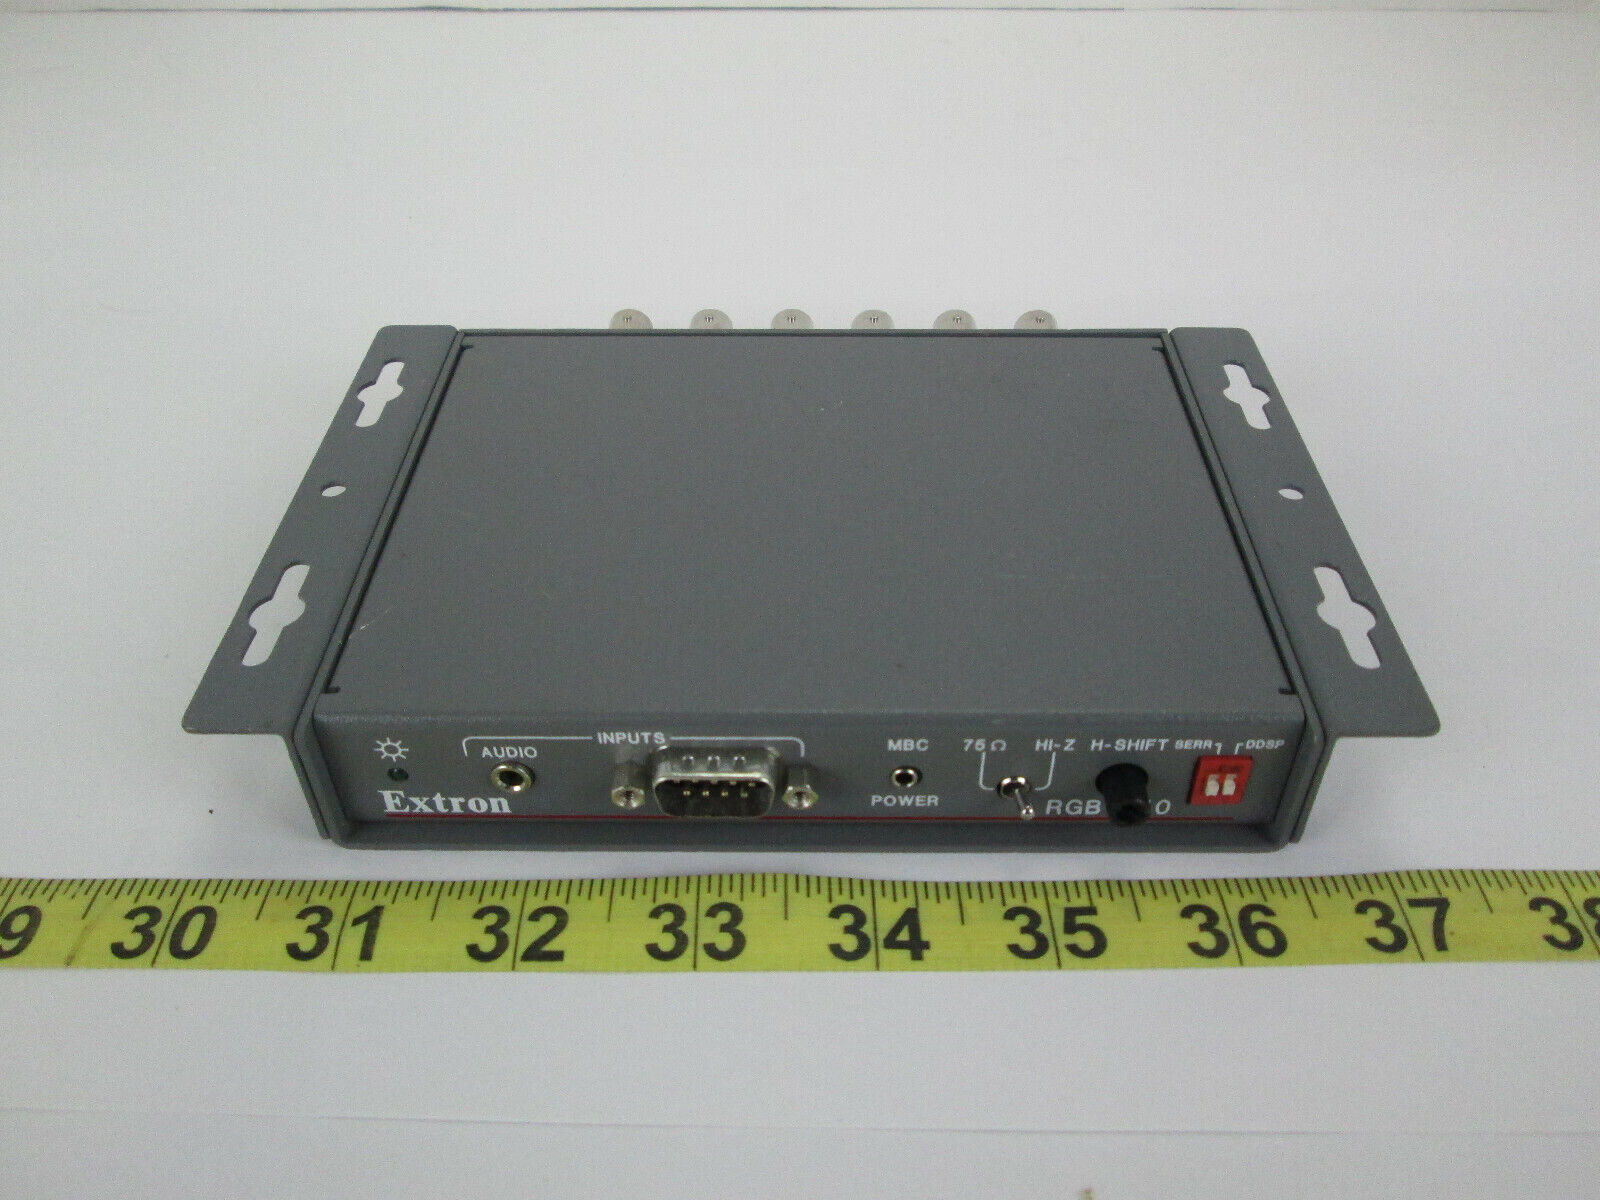 Extron Interface RGB 440 Computer Accessory Video Audio 